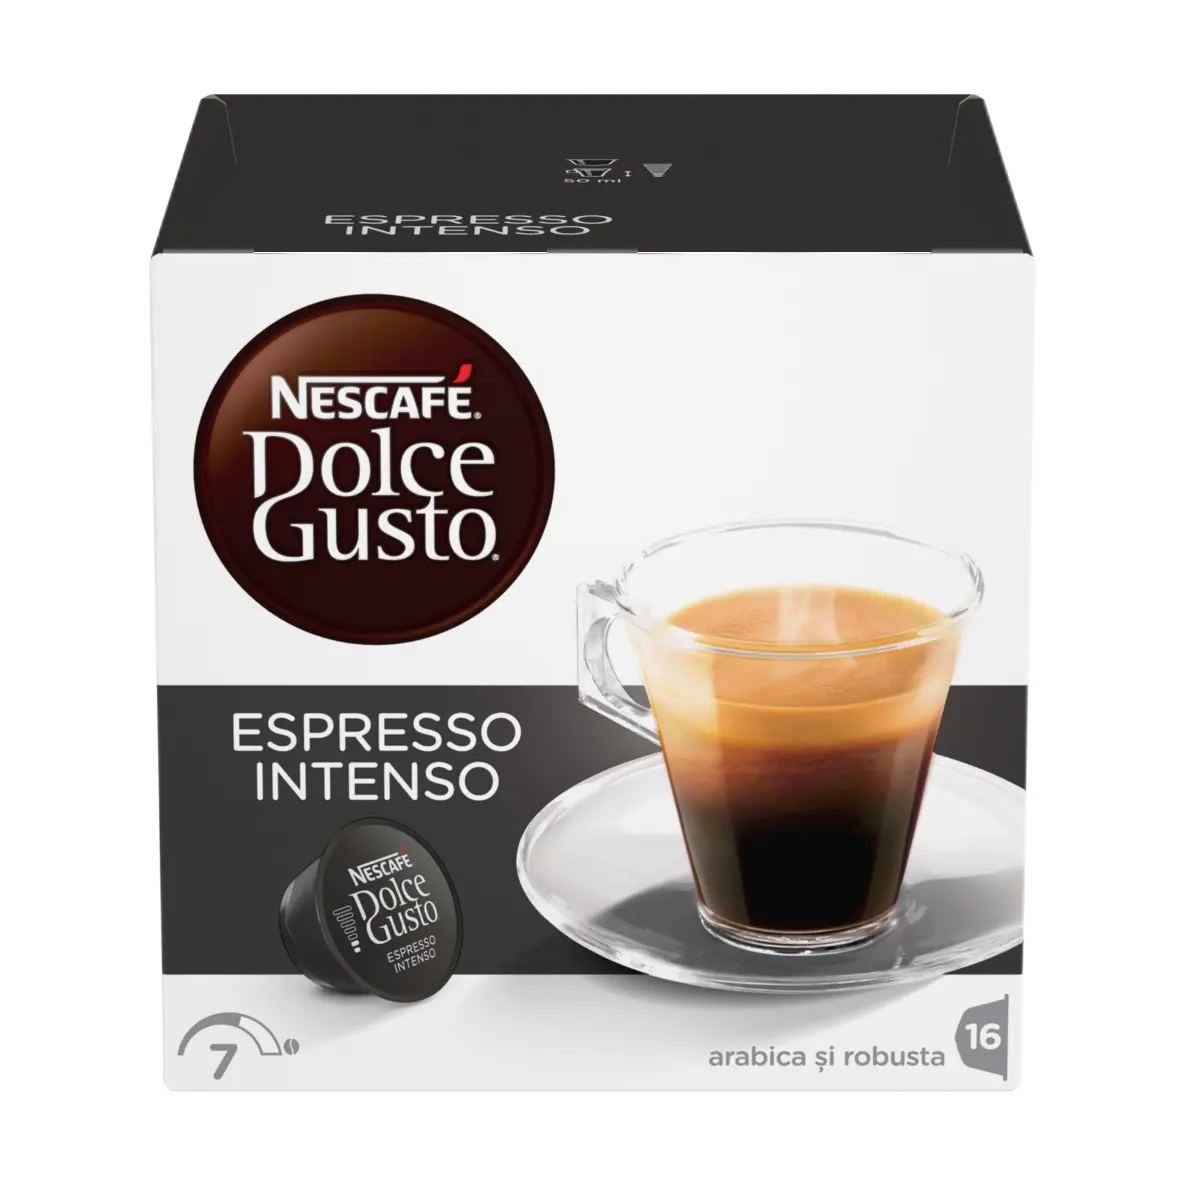 Capsule cafea Nescafe Dolce Gusto Espresso Intenso, 16 capsule cafea, 16 bauturi, 112g